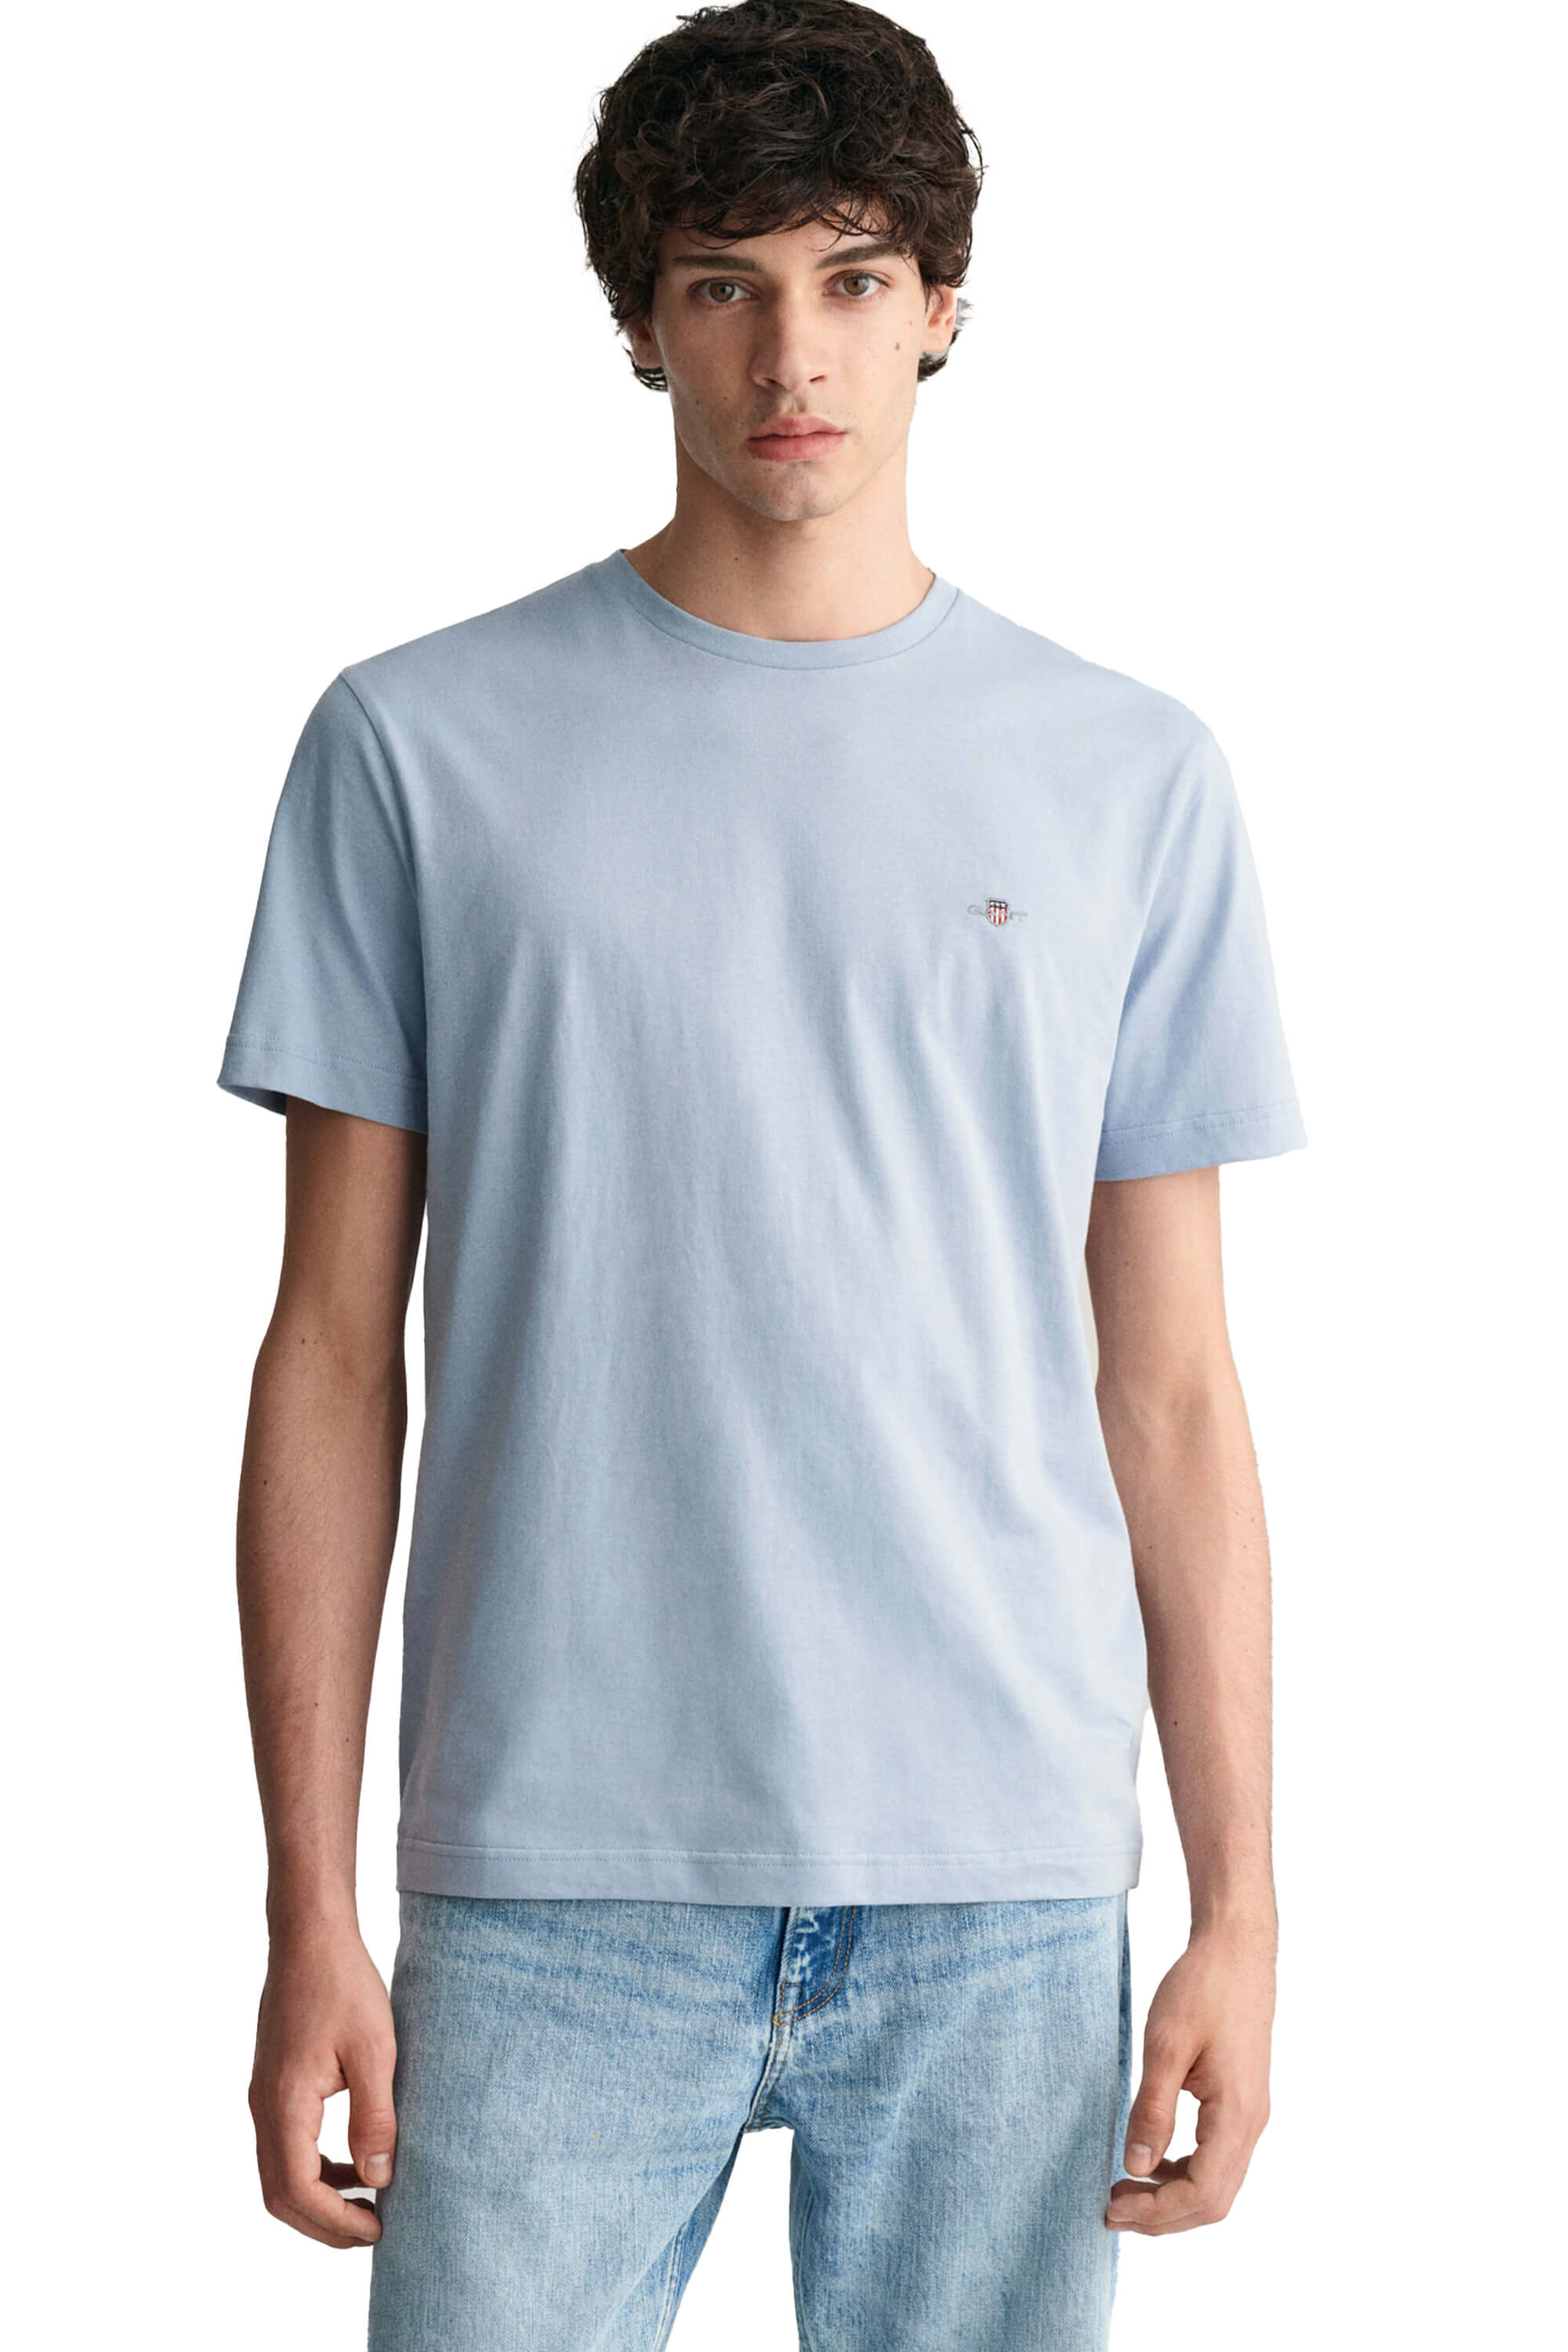 Gant Shield T-Shirt Dove Blue